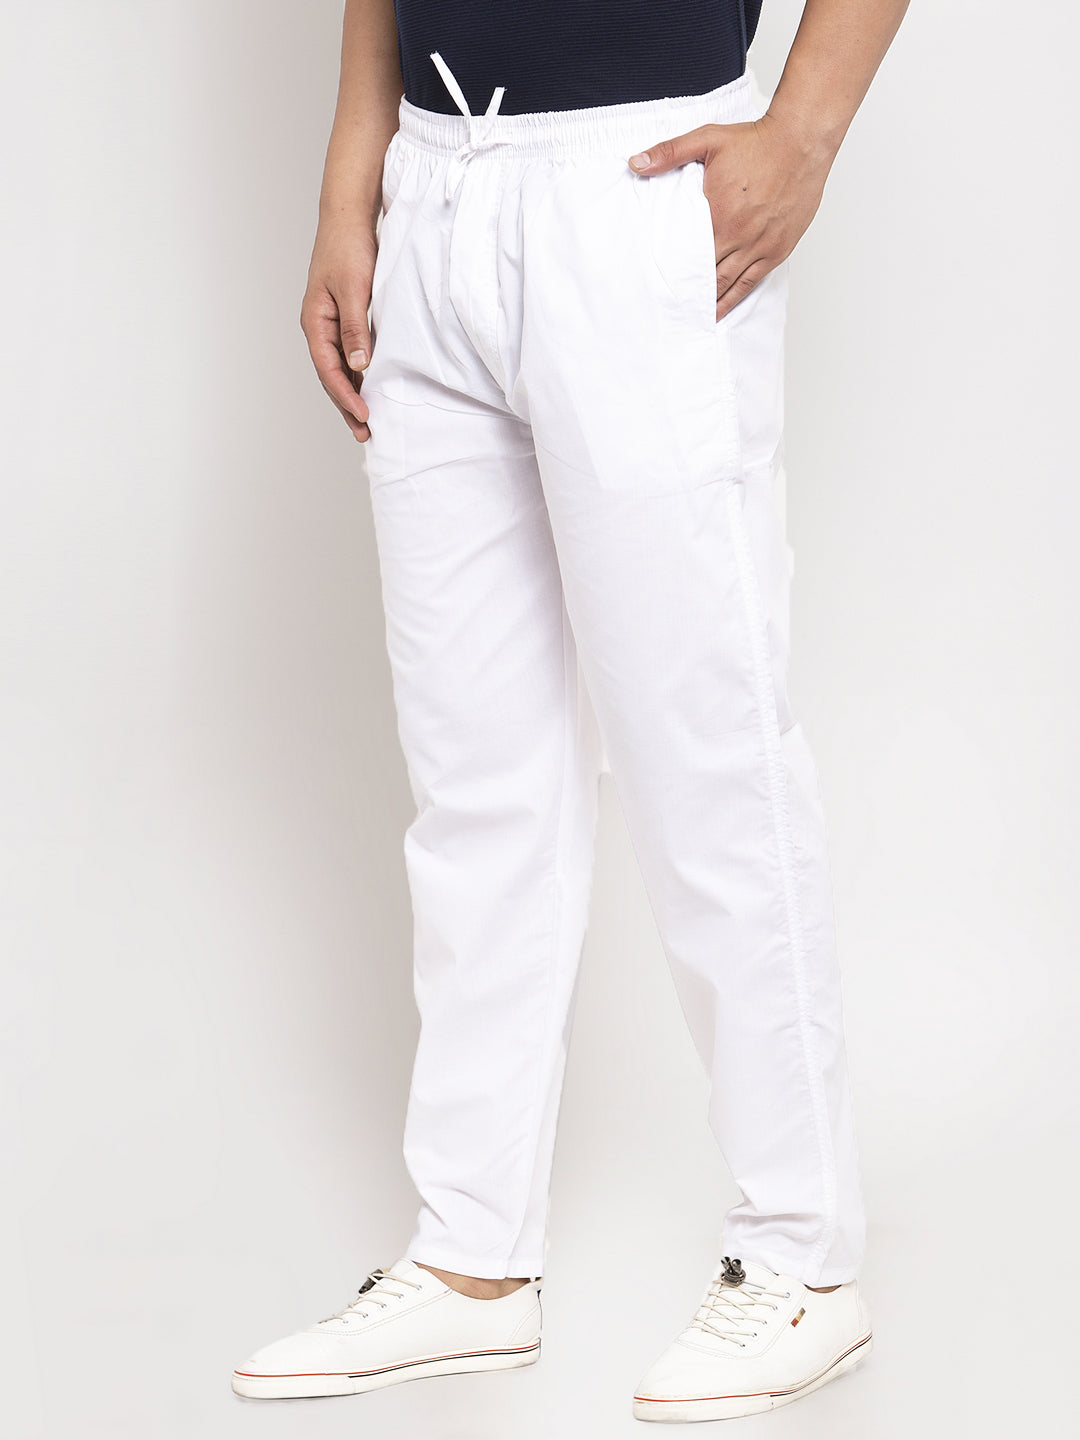 Jainish Men's White Solid Cotton Track Pants